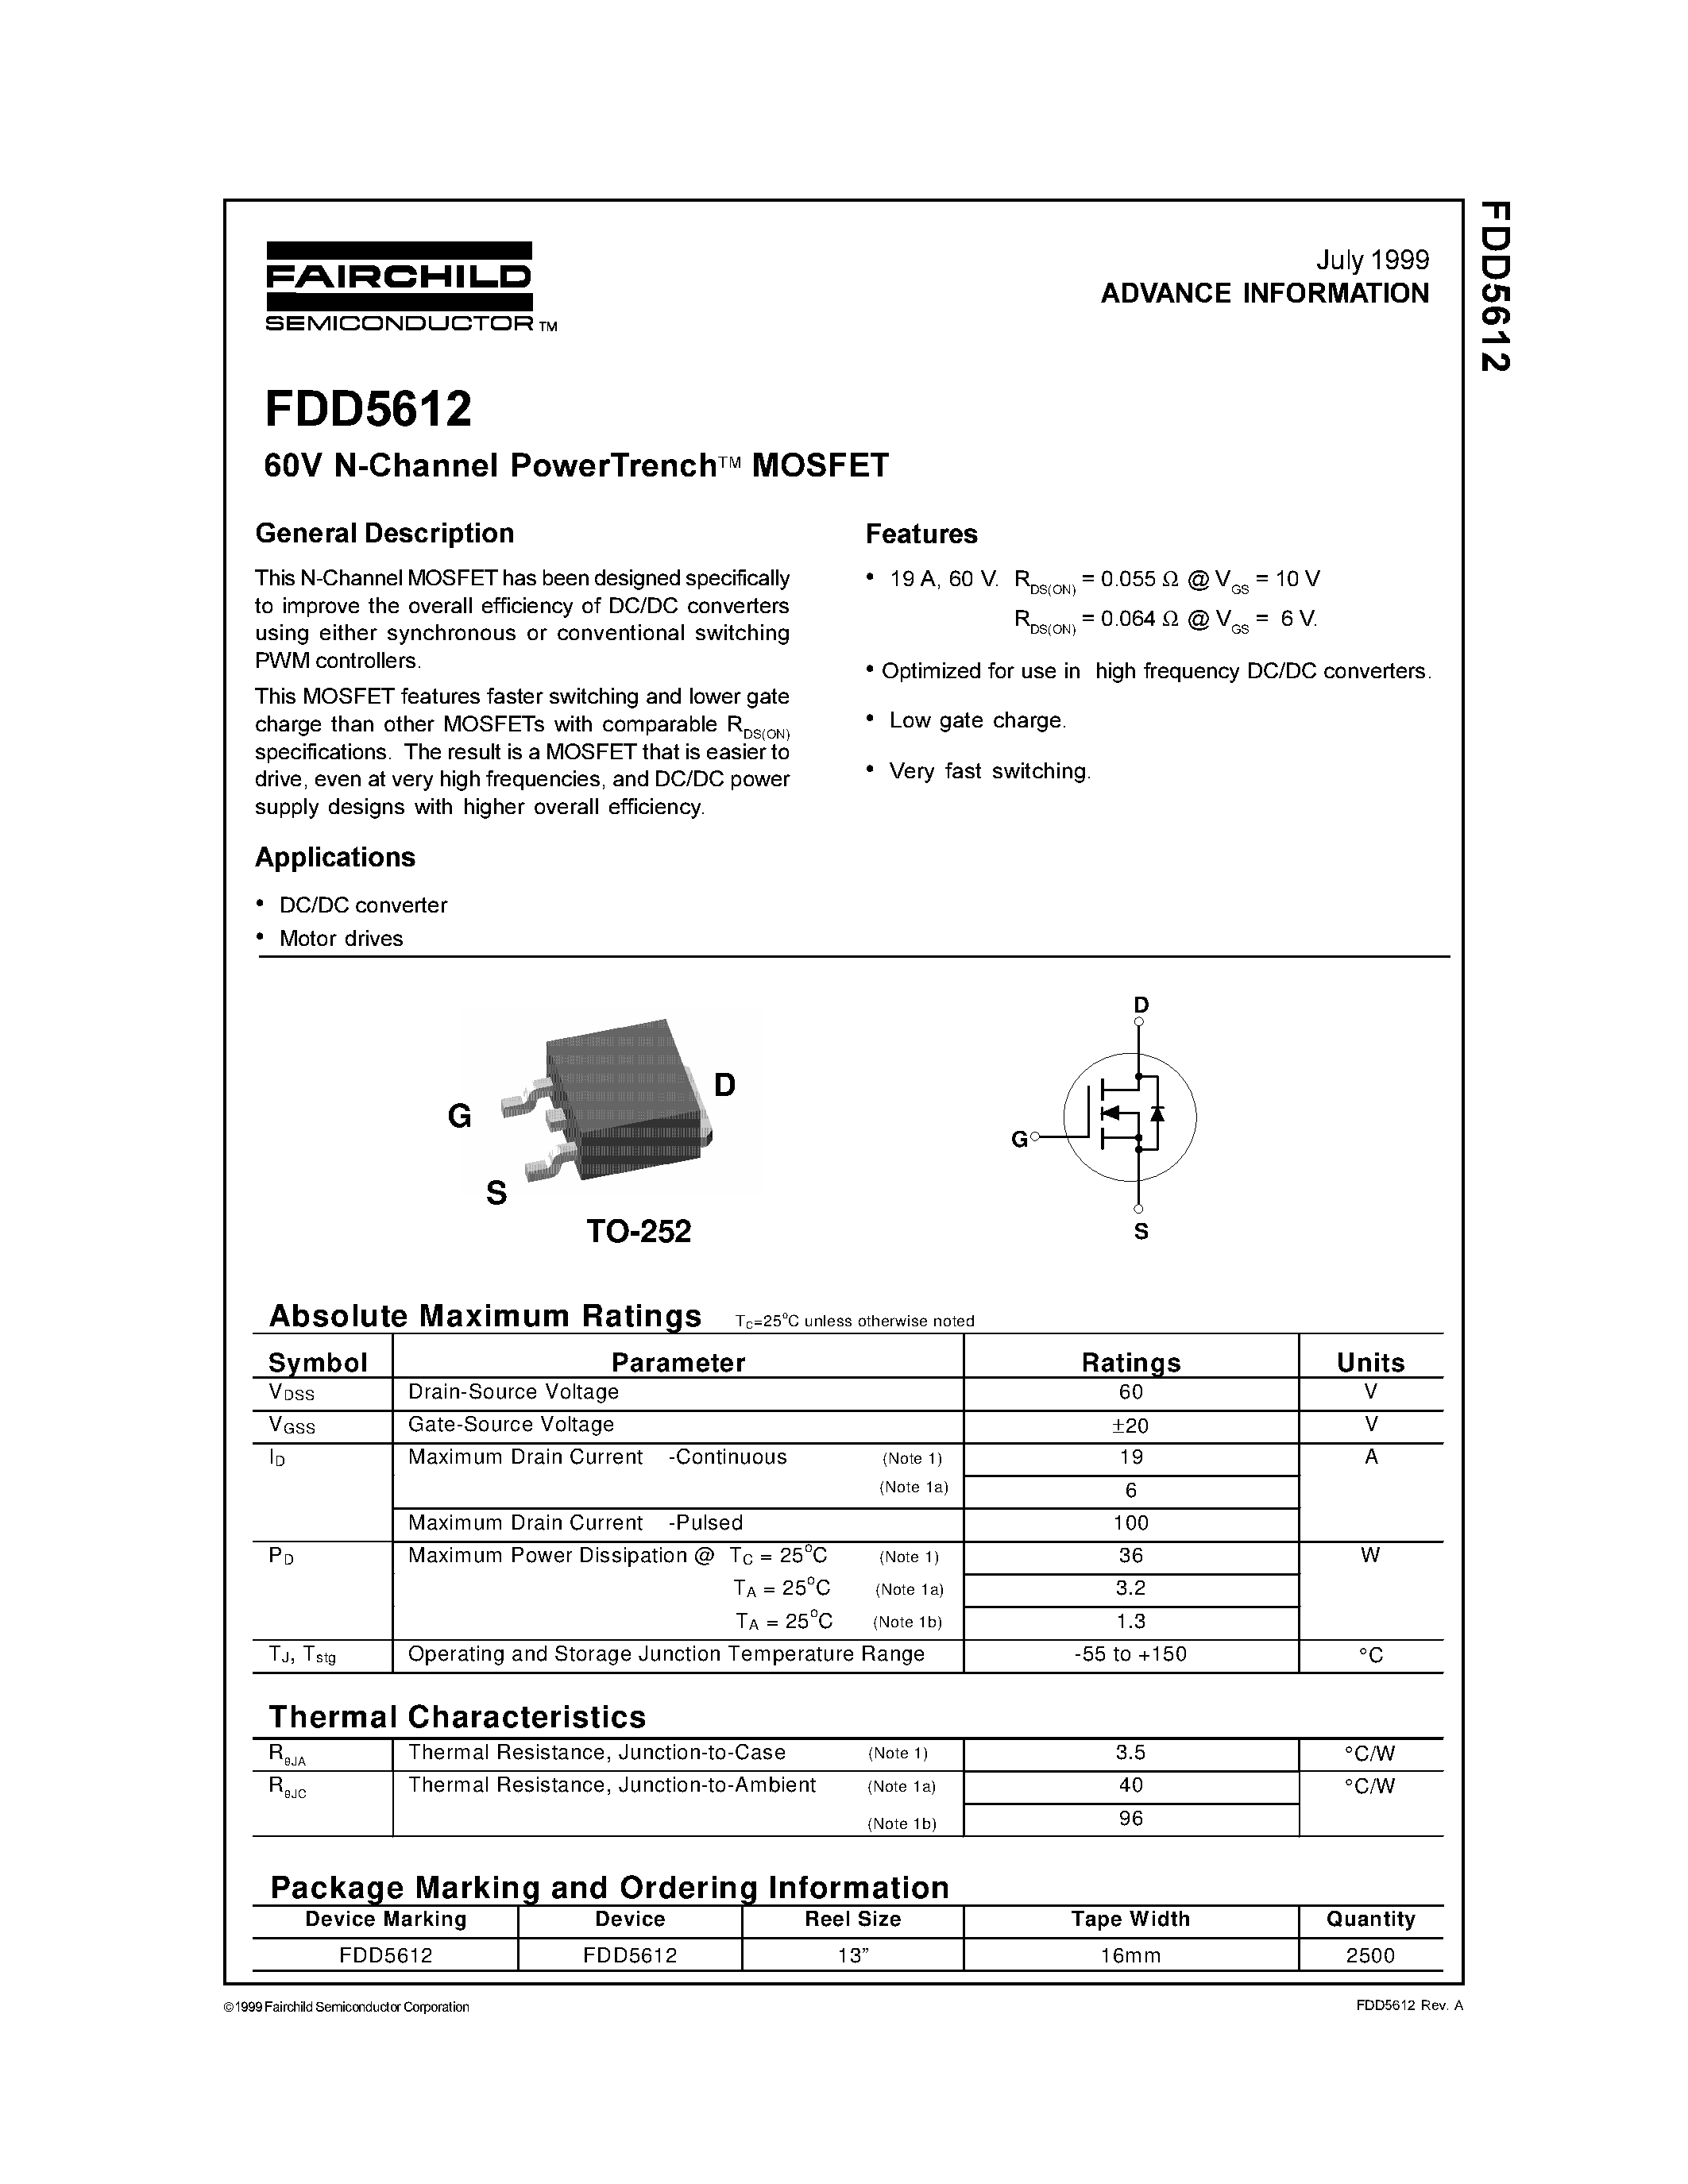 Даташит FDD5612 - 60V N-Channel PowerTrench MOSFET страница 1